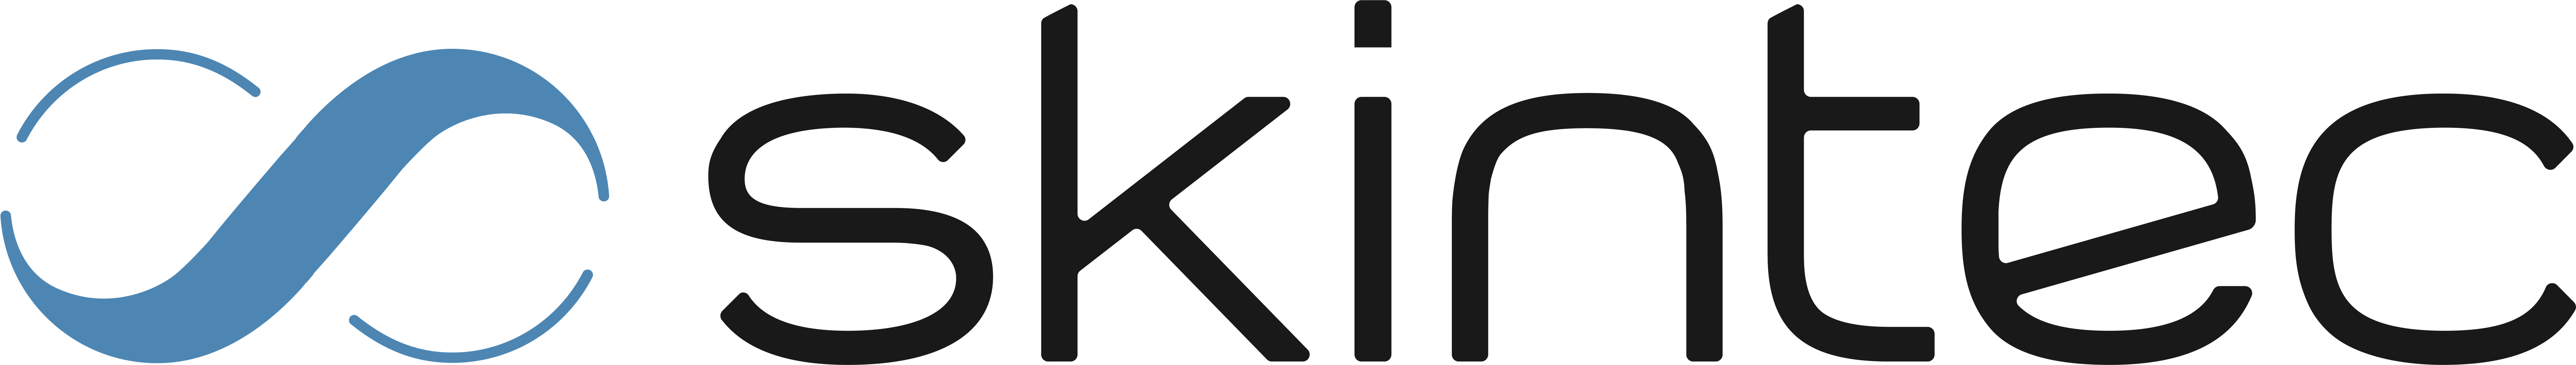 logo_skintec-2